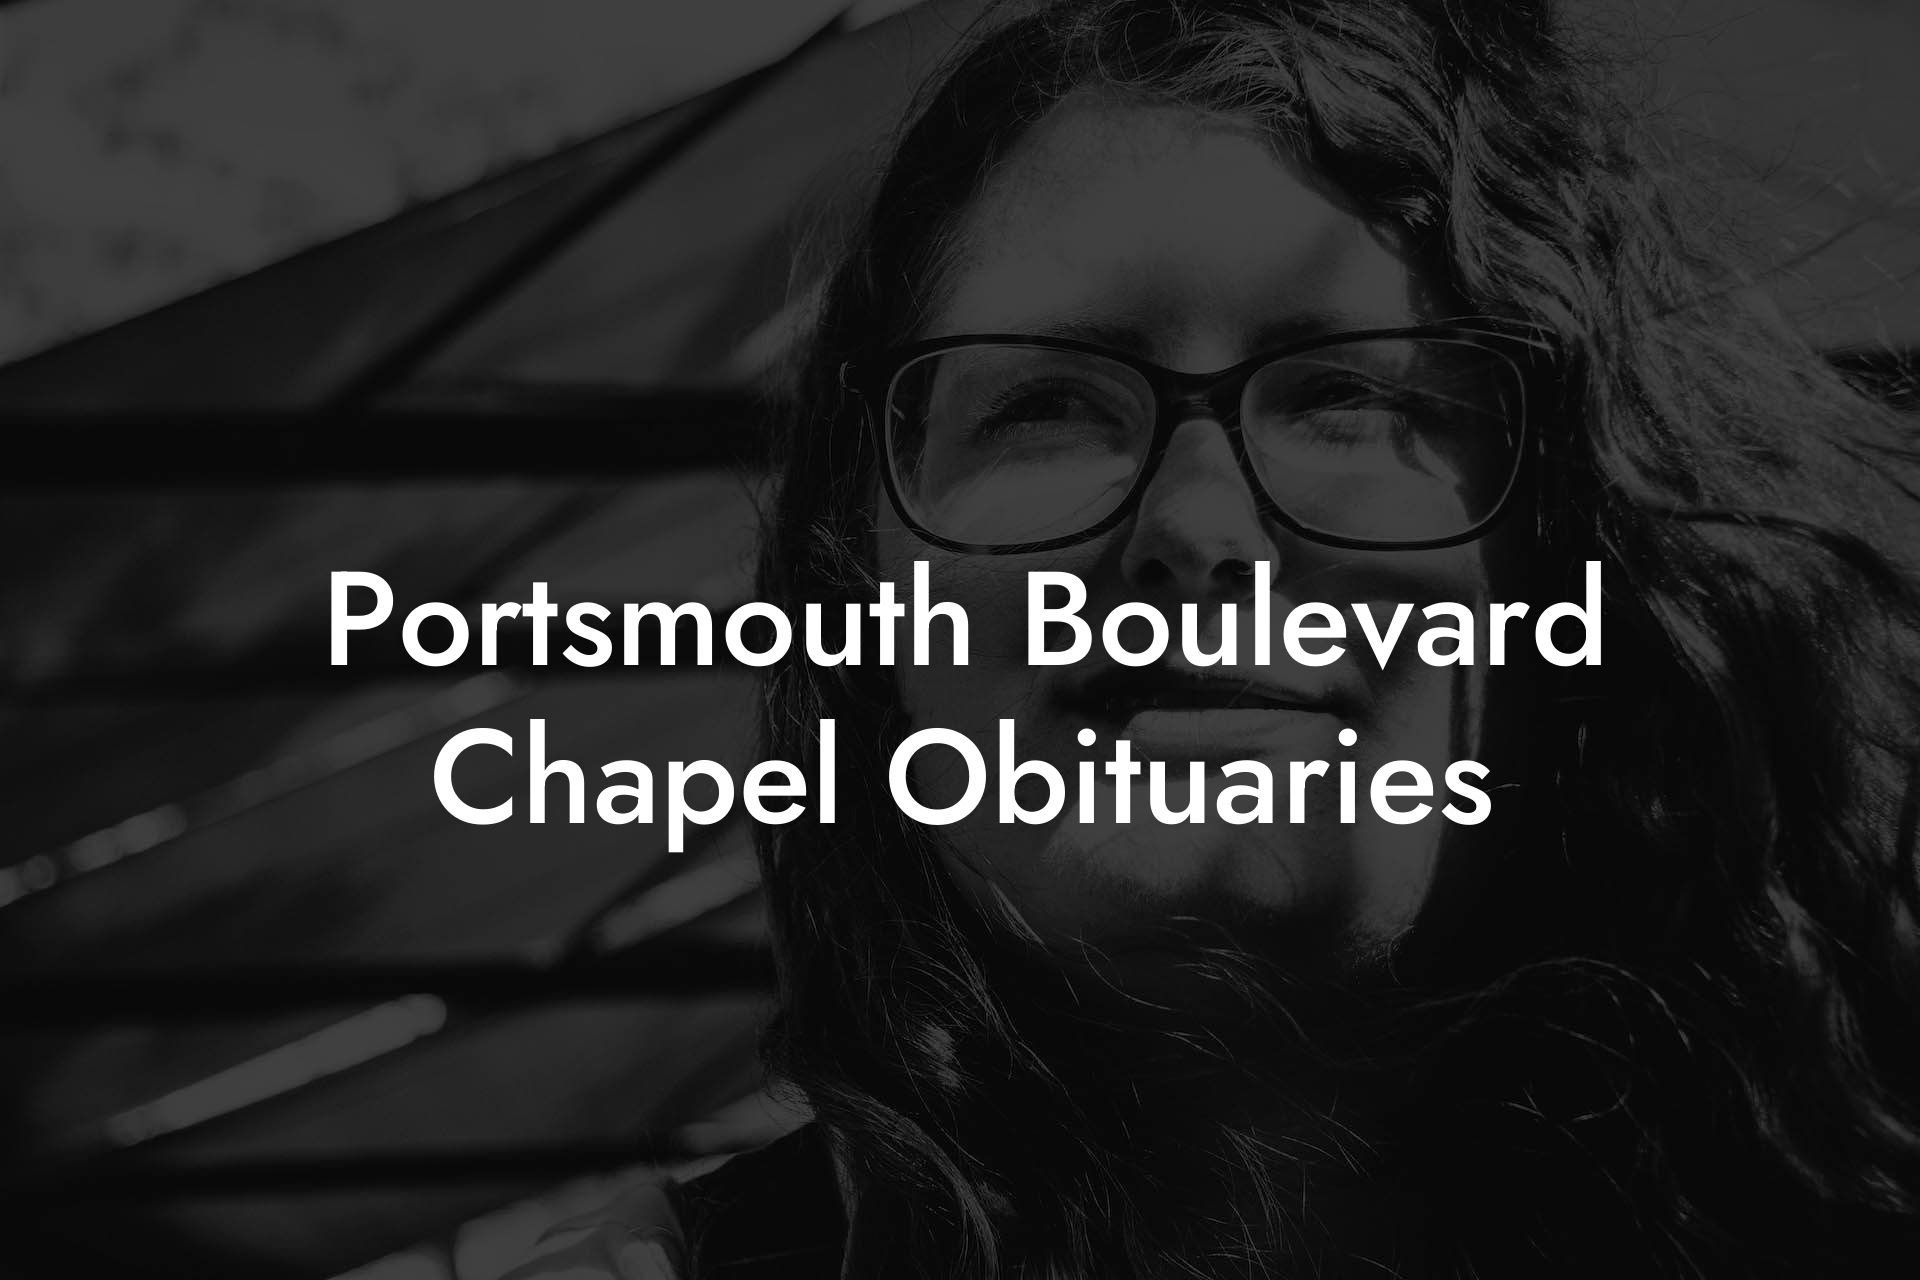 Portsmouth Boulevard Chapel Obituaries